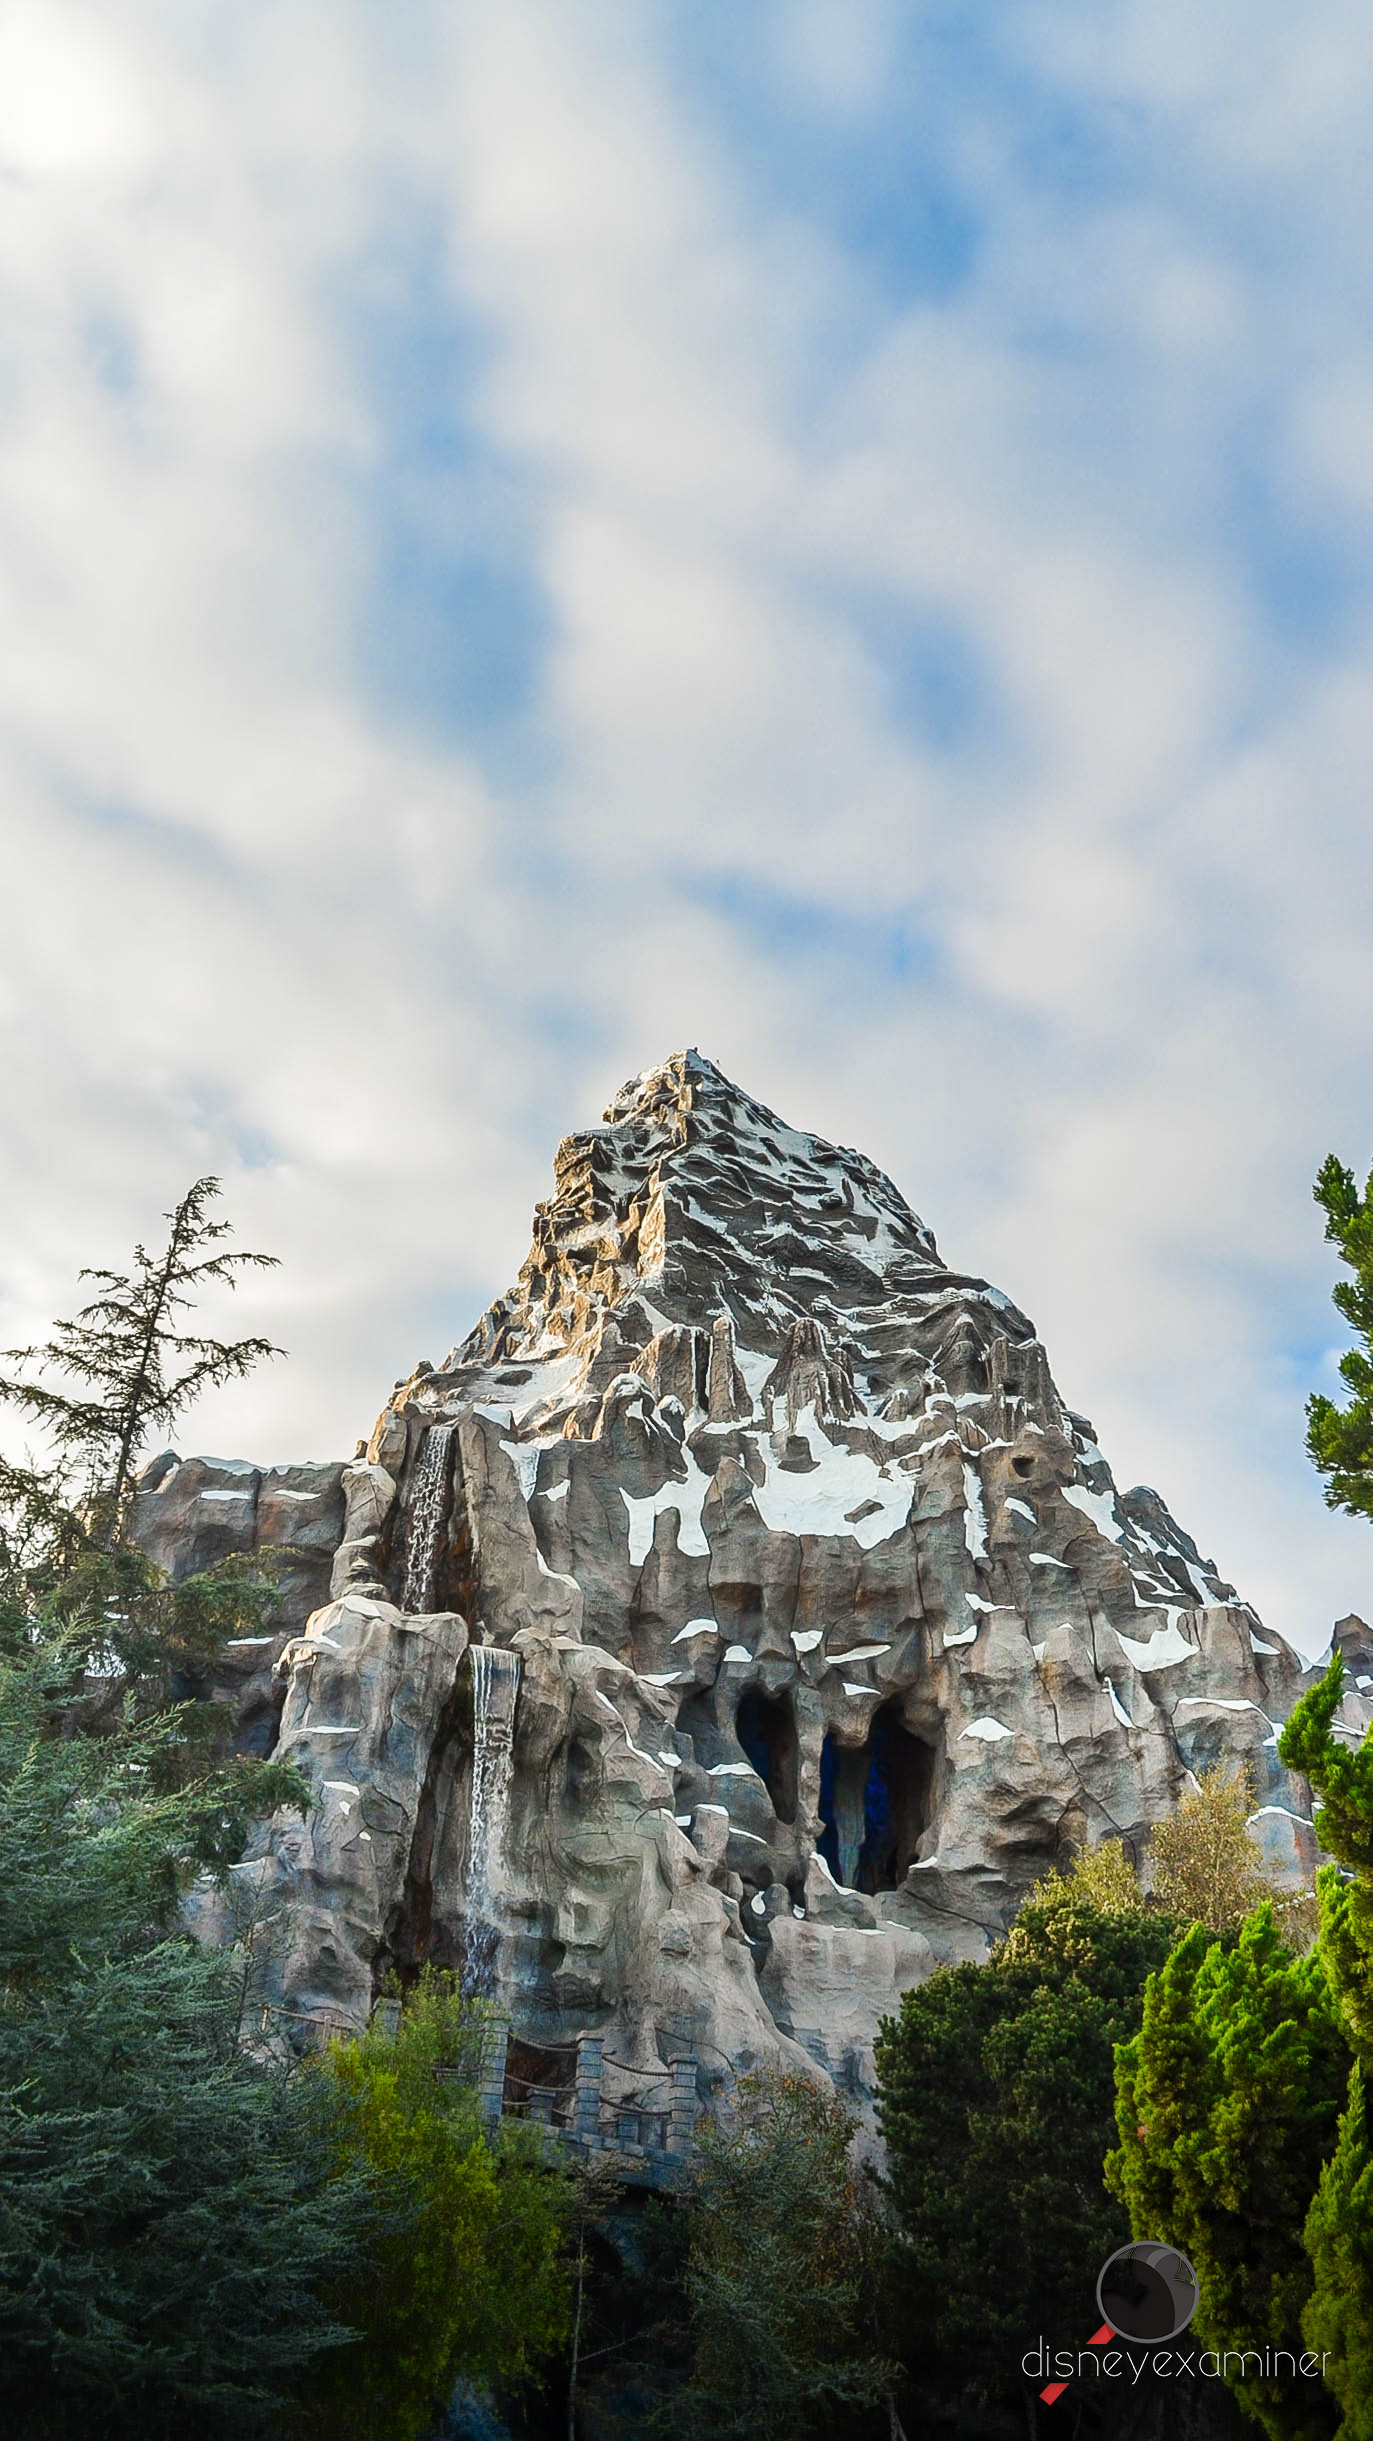 Disneyland Matterhorn Bobsleds Disneyexaminer Mobile Device Wallpaper